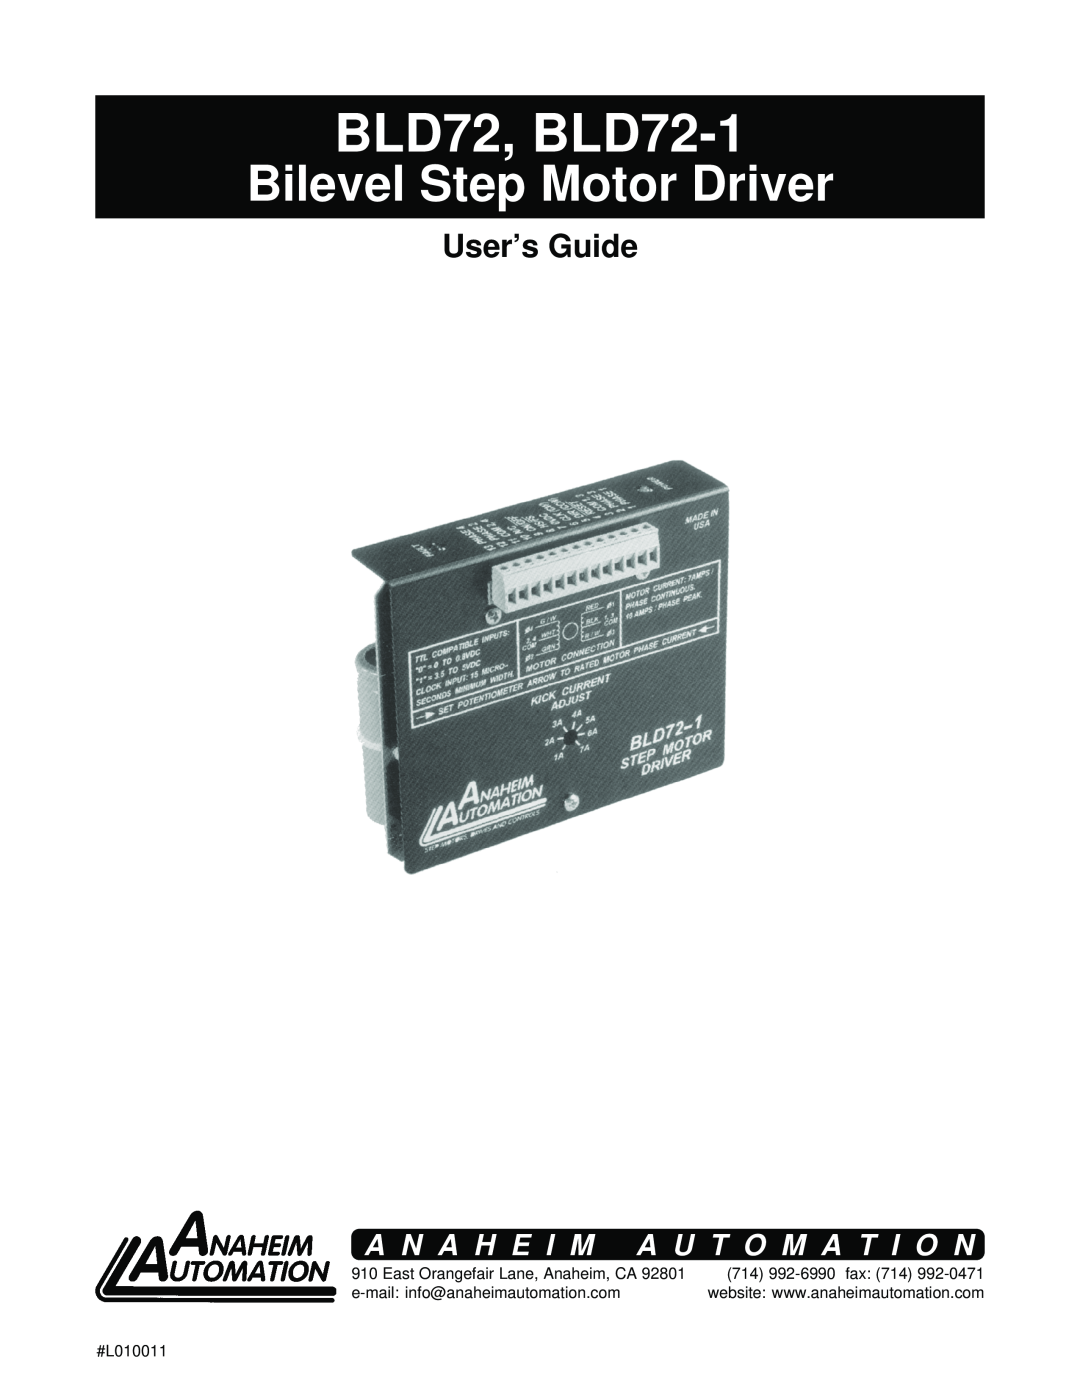 Anaheim manual BLD72, BLD72-1, Bilevel Step Motor Driver, User’s Guide, A N A H E I M A U T O M A T I O N, #L010011 